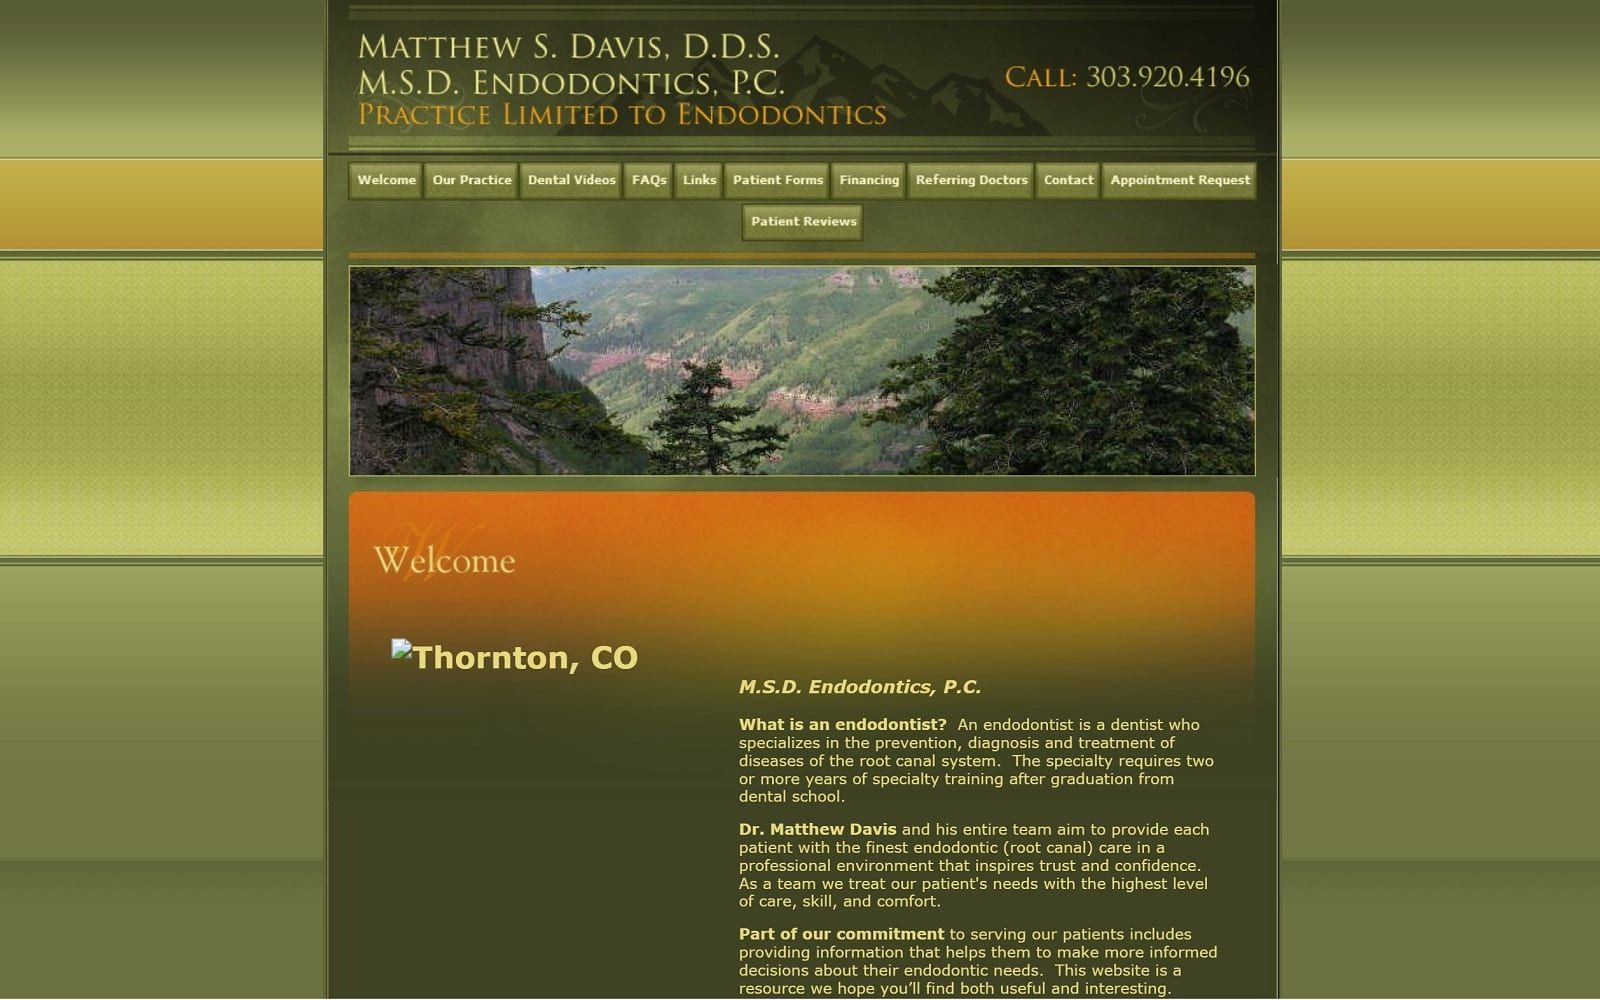 The screenshot of msd endodontics dr. Matthew davis msdendodontics. Com website